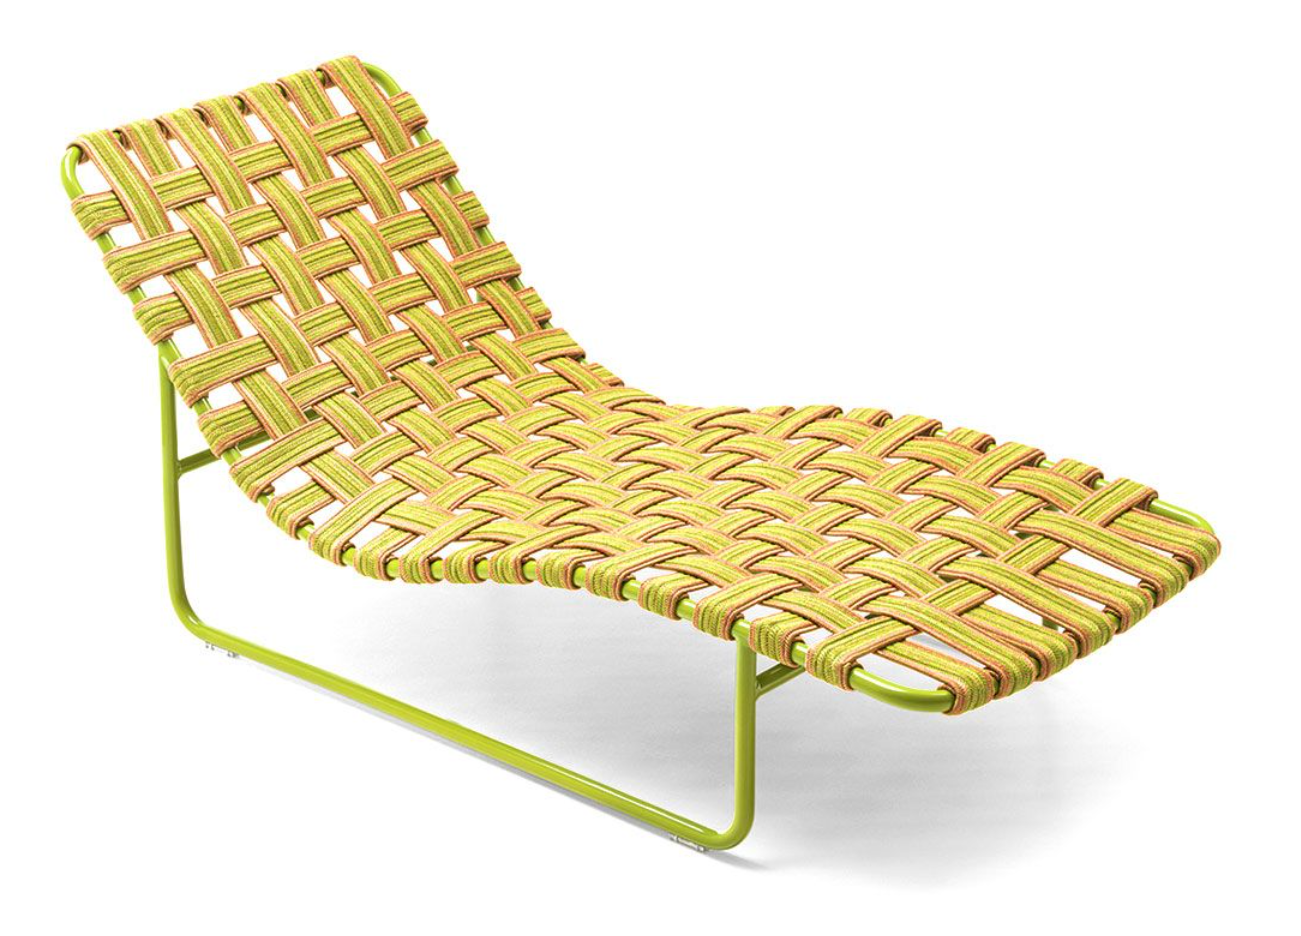 Product Image Baleari Chaise Lounge